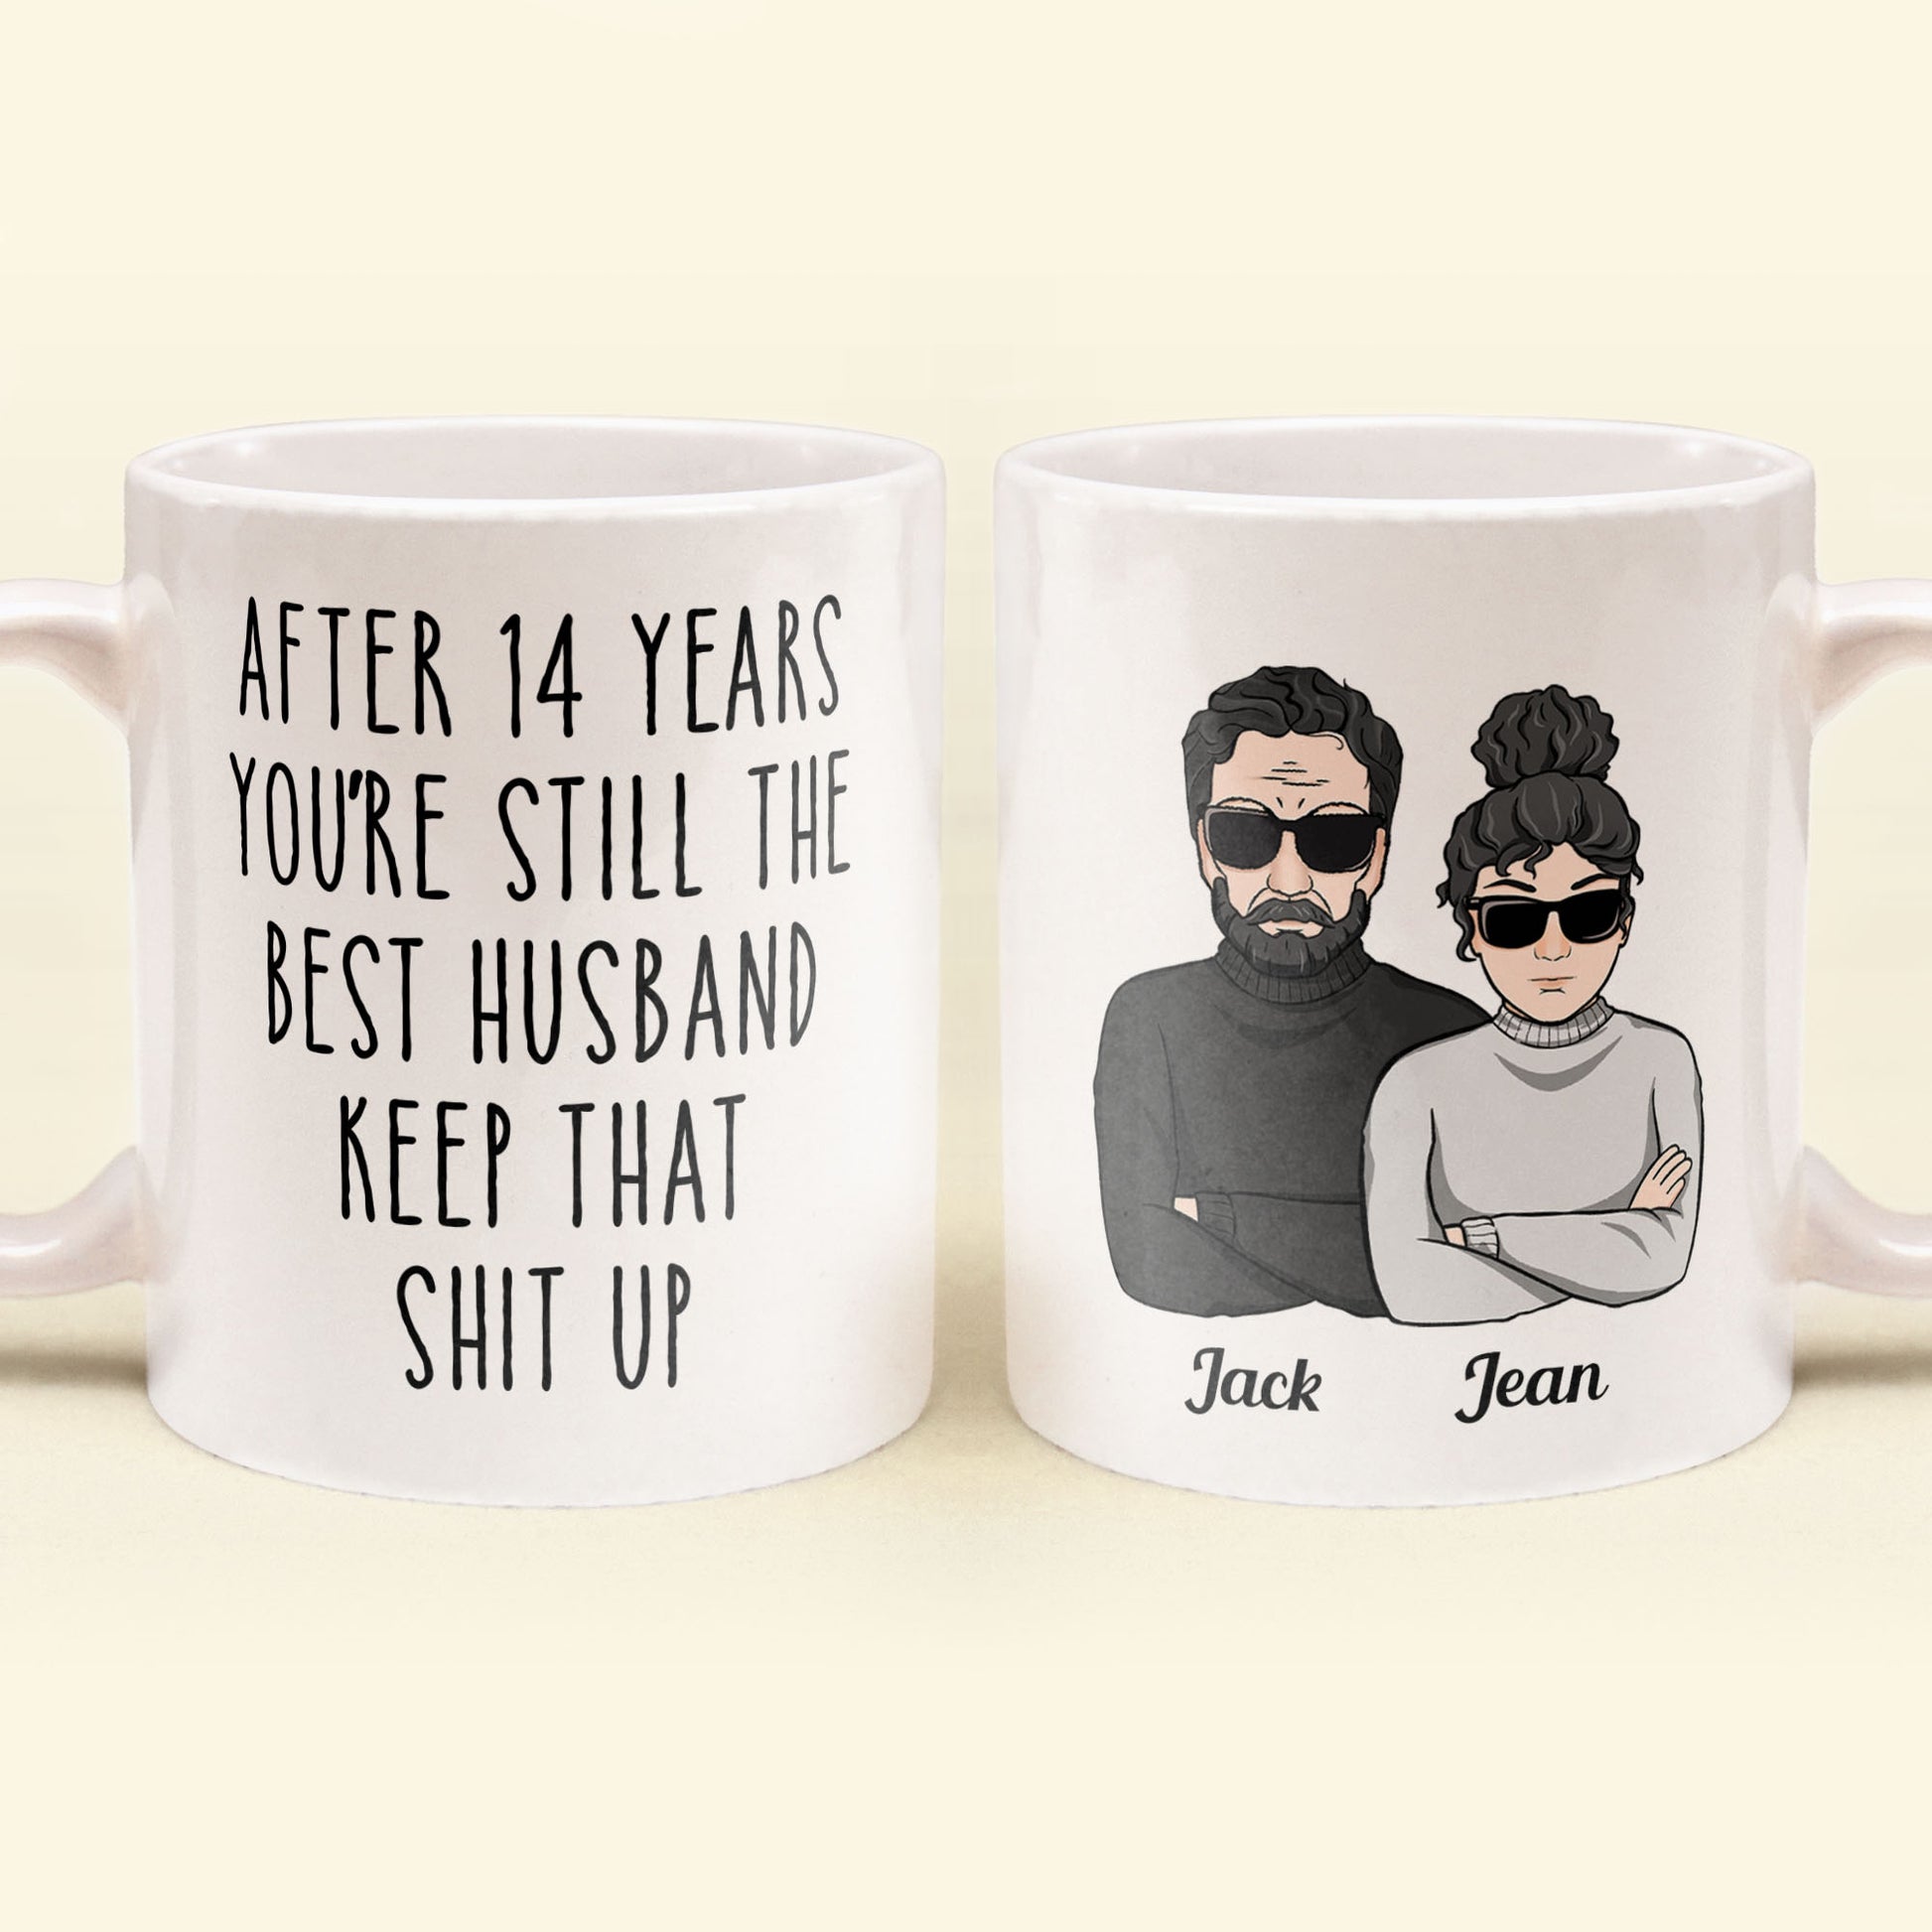 Still The Best Husband - Personalized Mug - Anniversary Gift, Birthday Gift For Husband